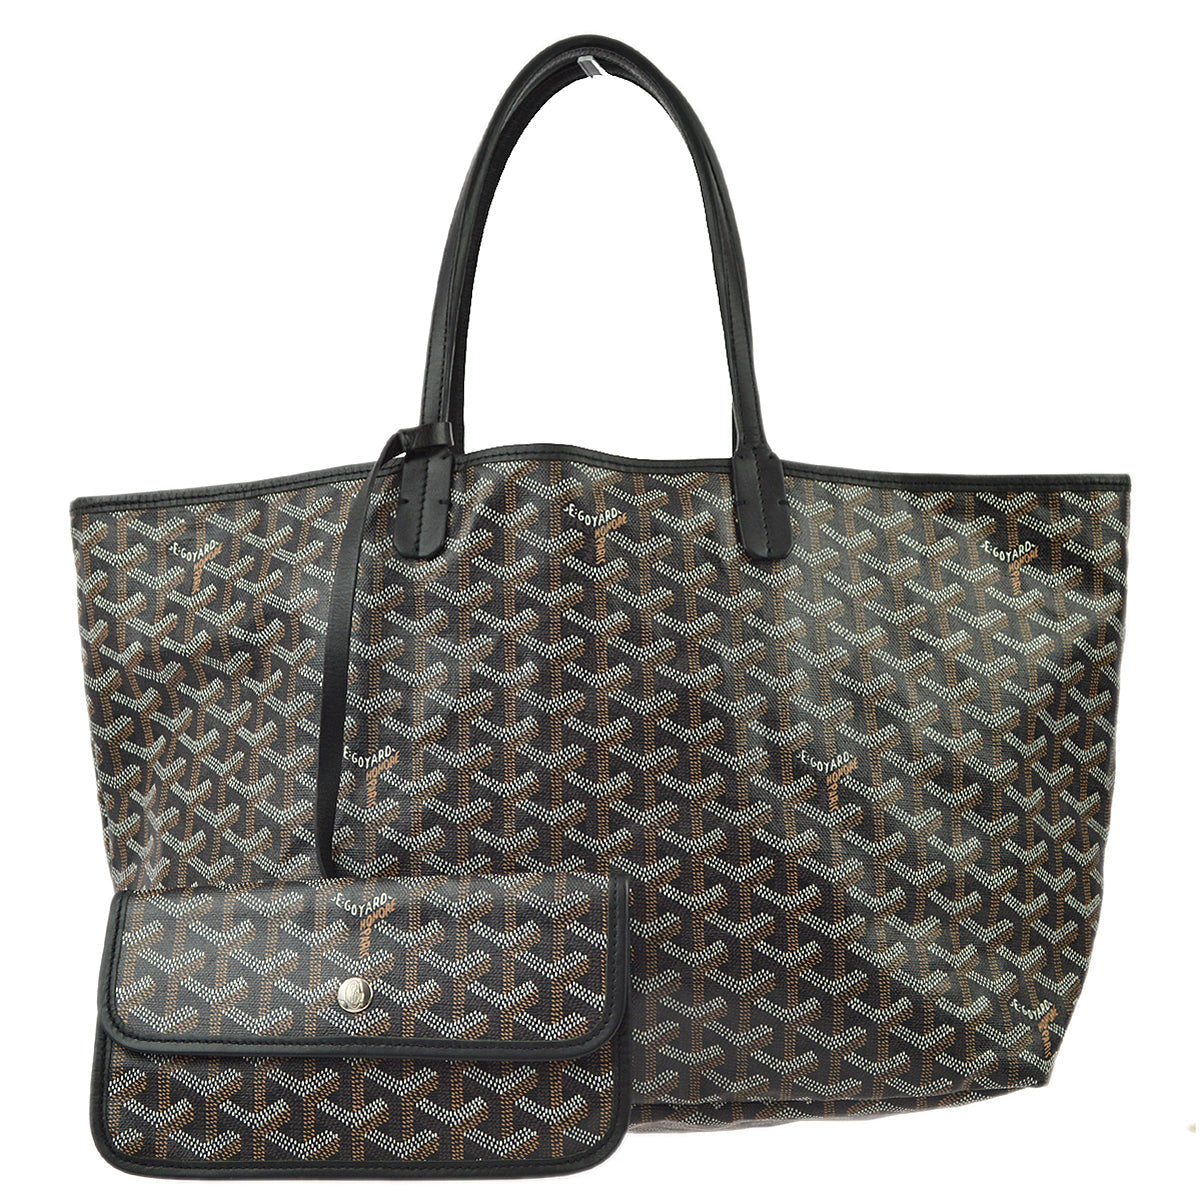 Goyard Black St. Louis MM Tote Handbag